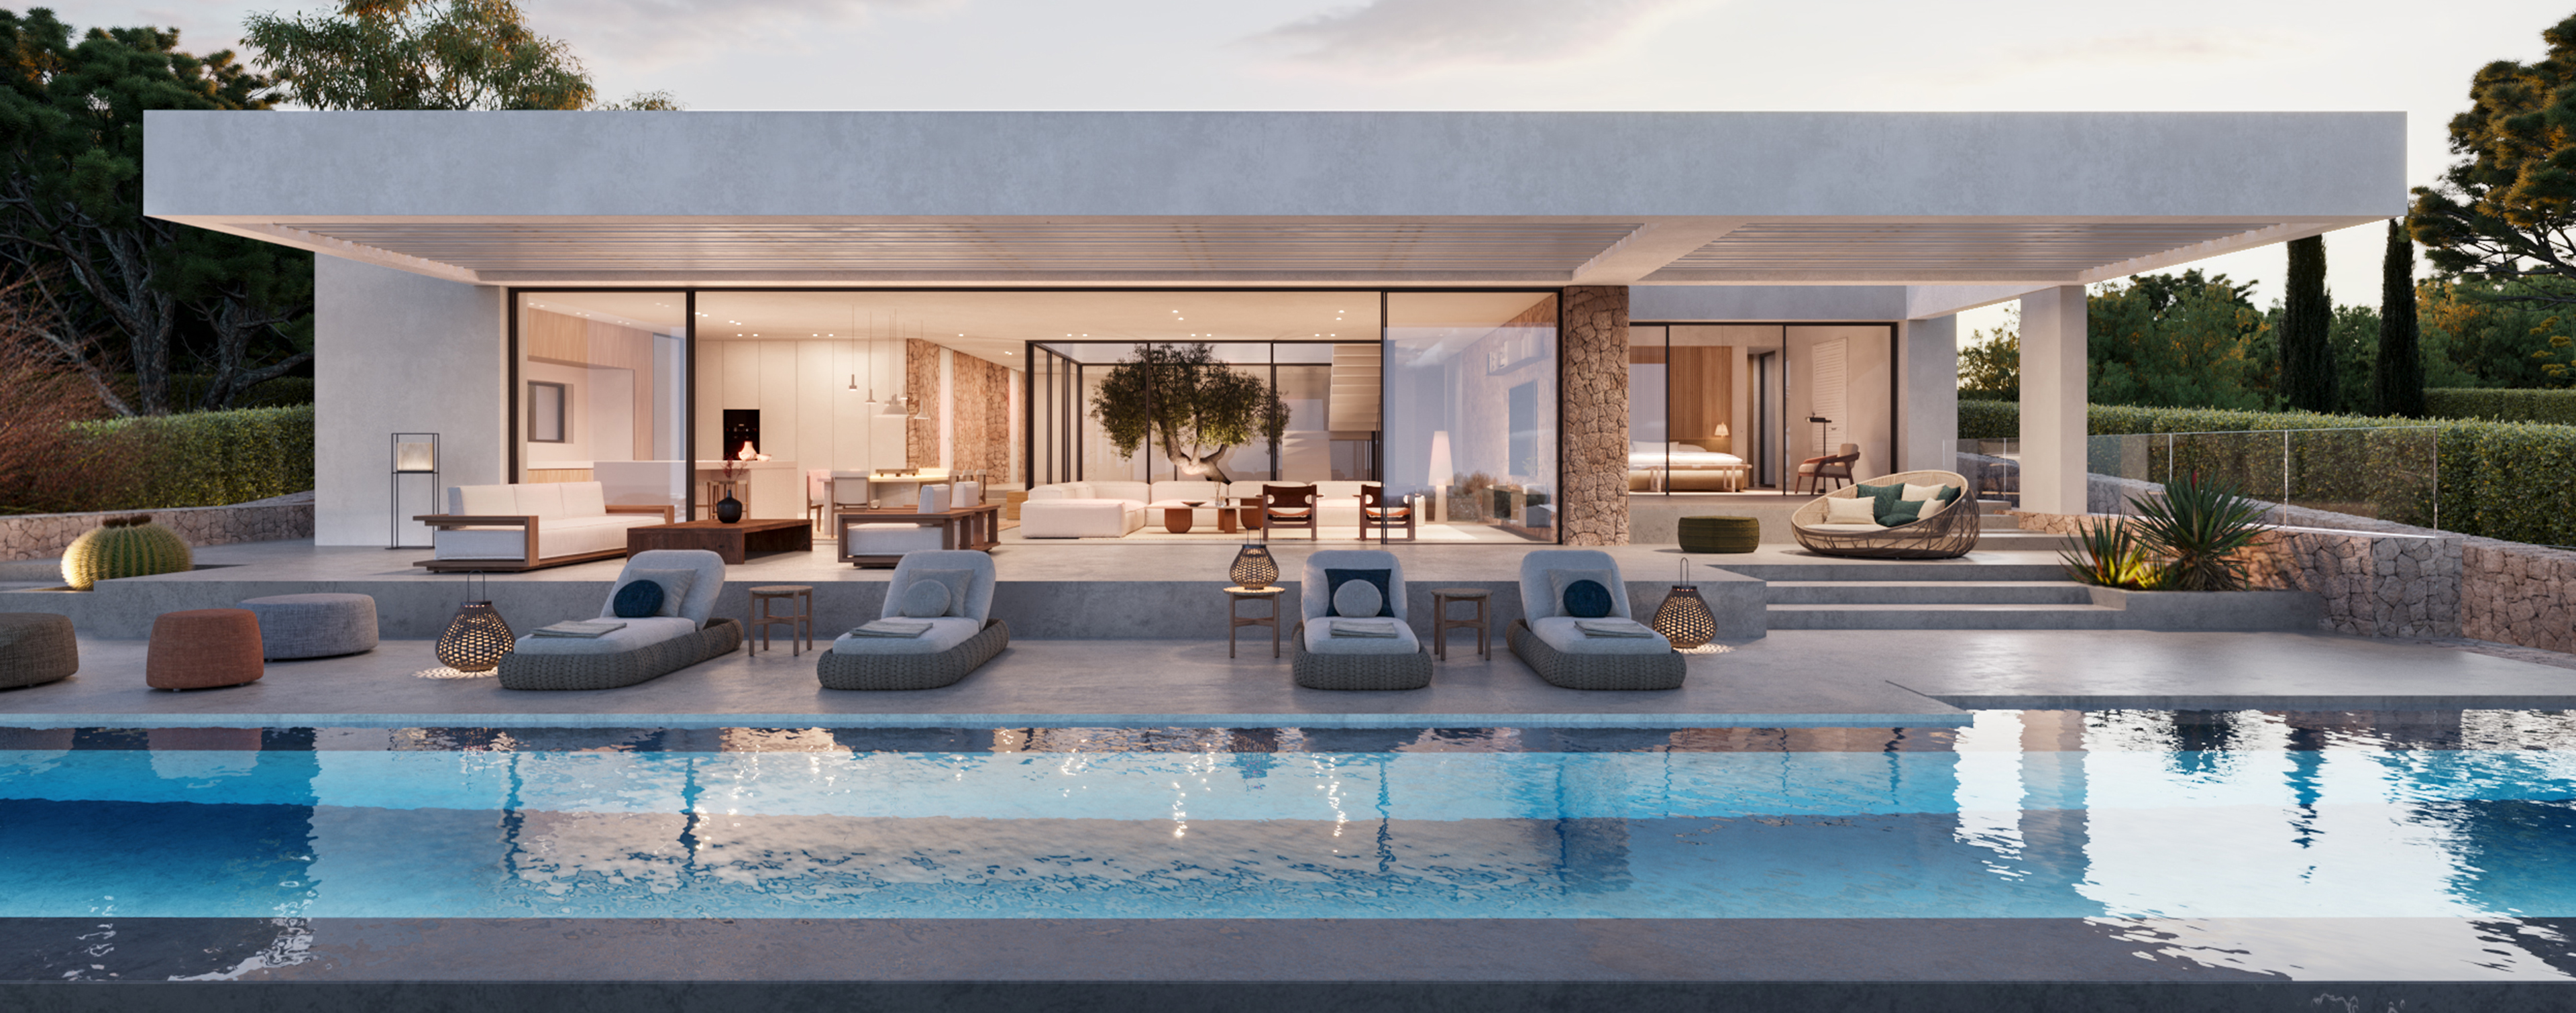 luv studio luxury architects menorca gambi house IMG 02 - LUV Studio - Architecture et design - Barcelone